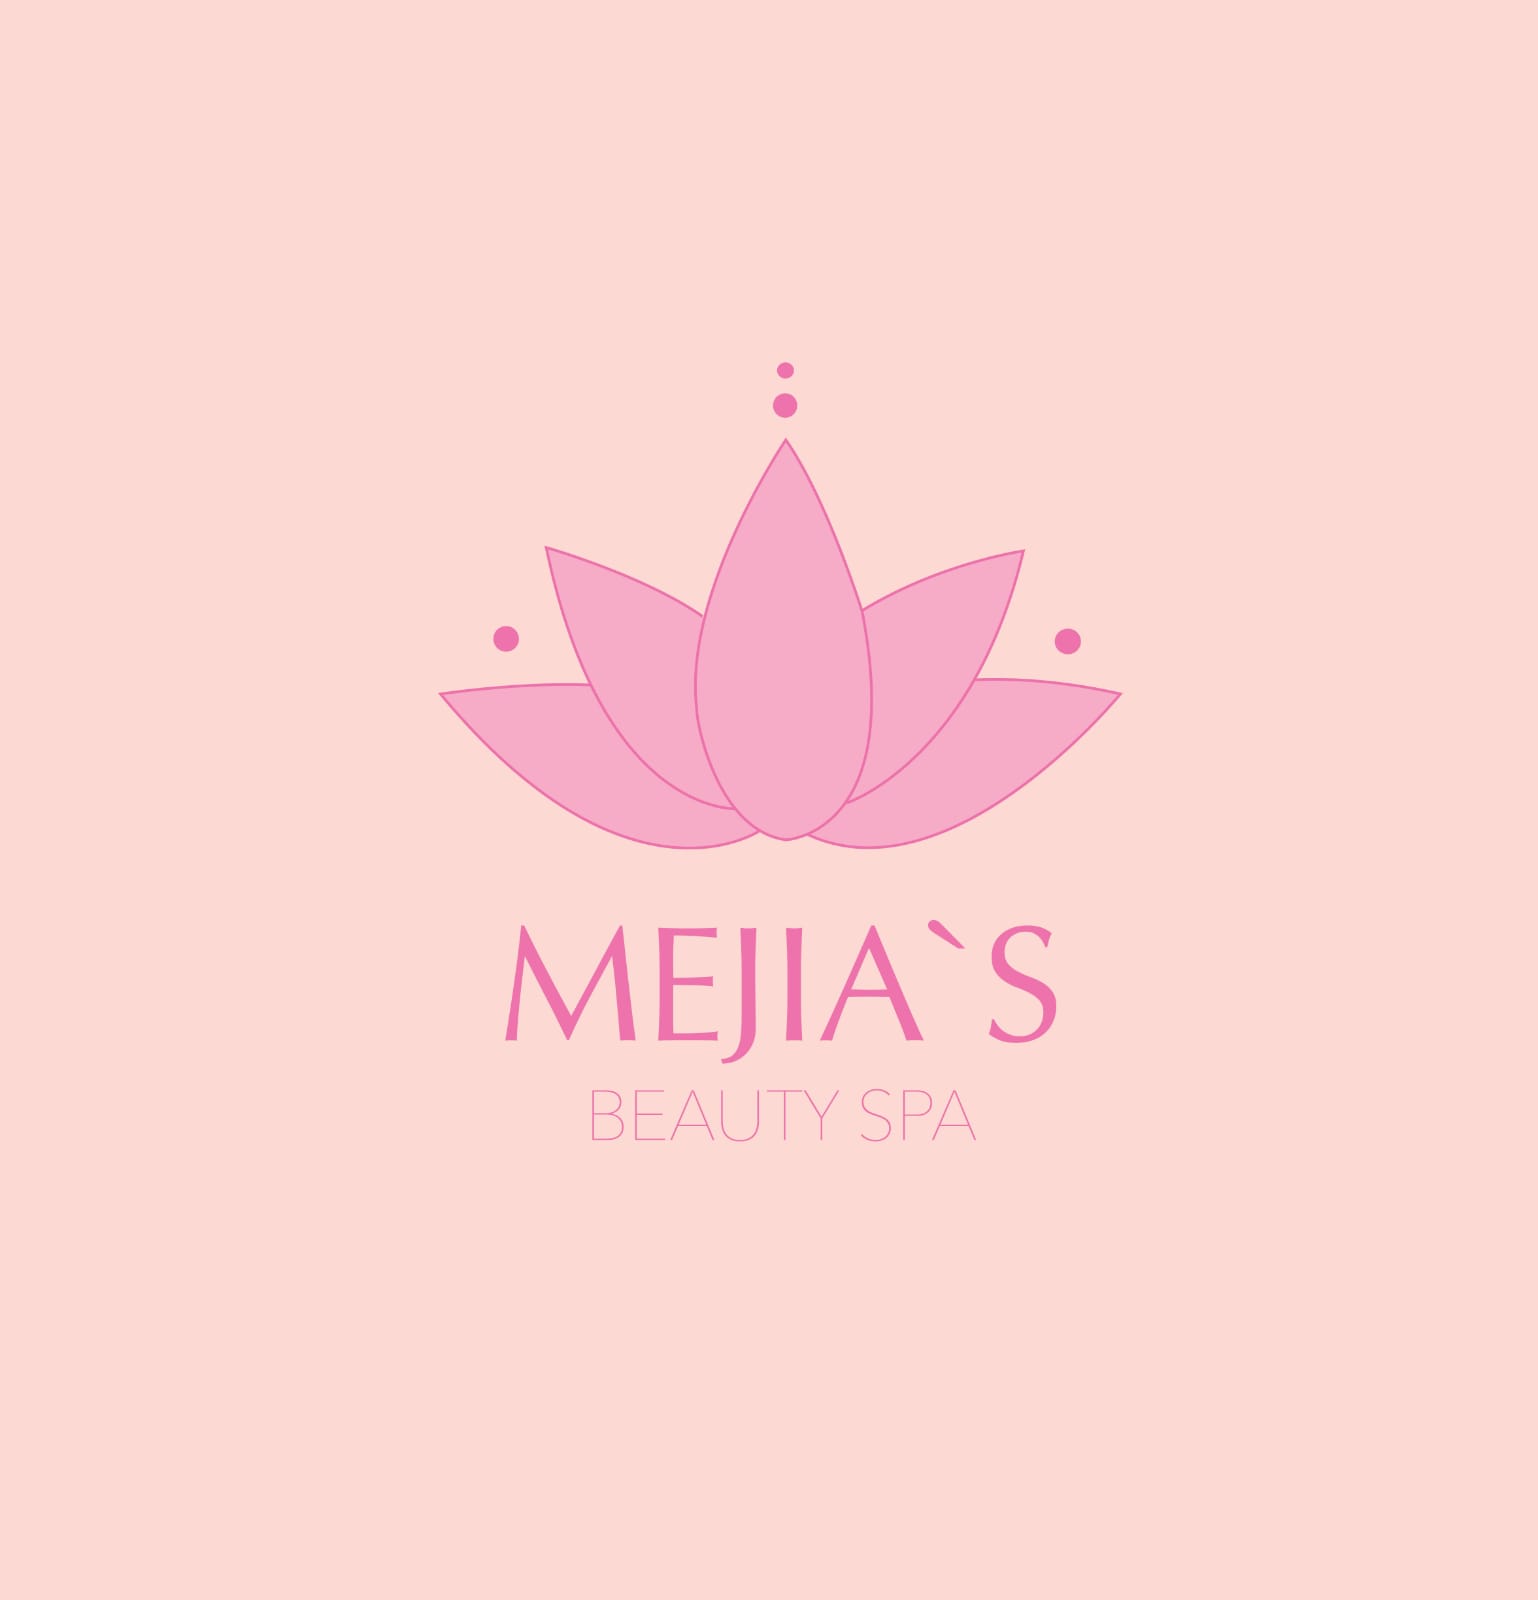 Mejias Beauty Spa